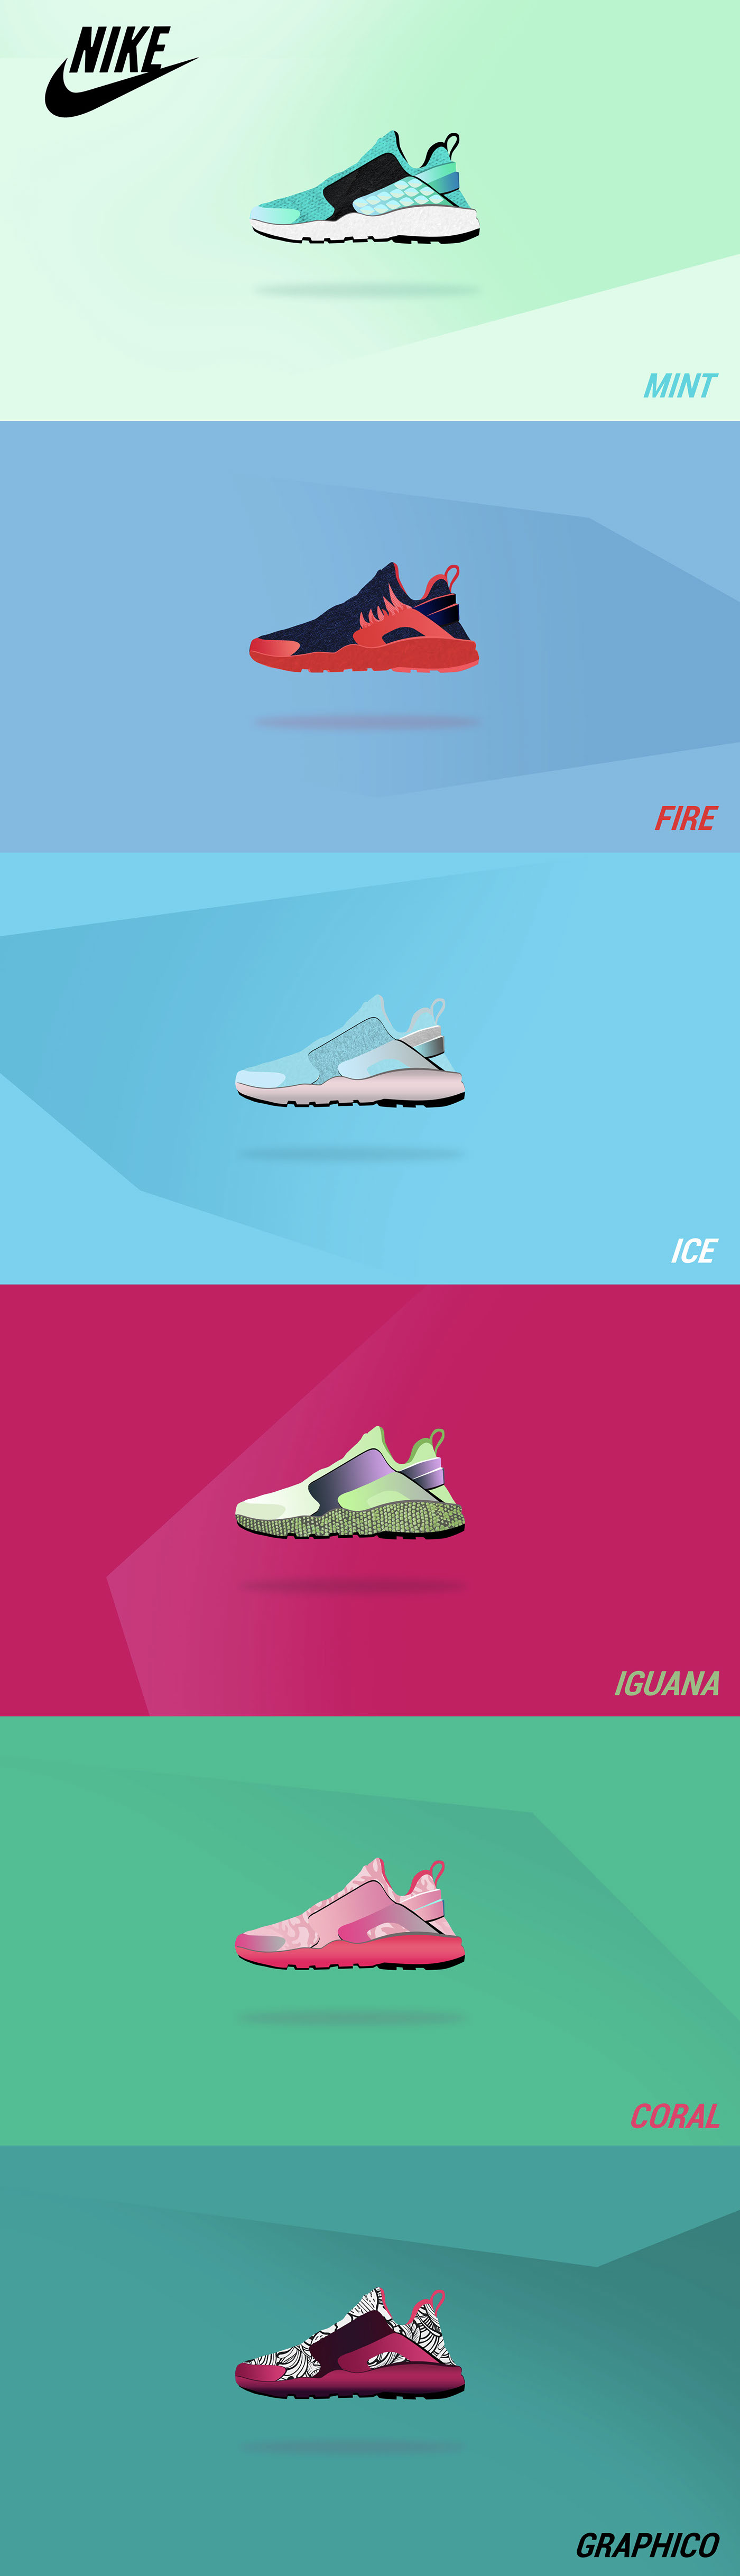 Nike Shoes Nike experimental flat illustration shoes design shoes footwear footweardesign footwear design nike air